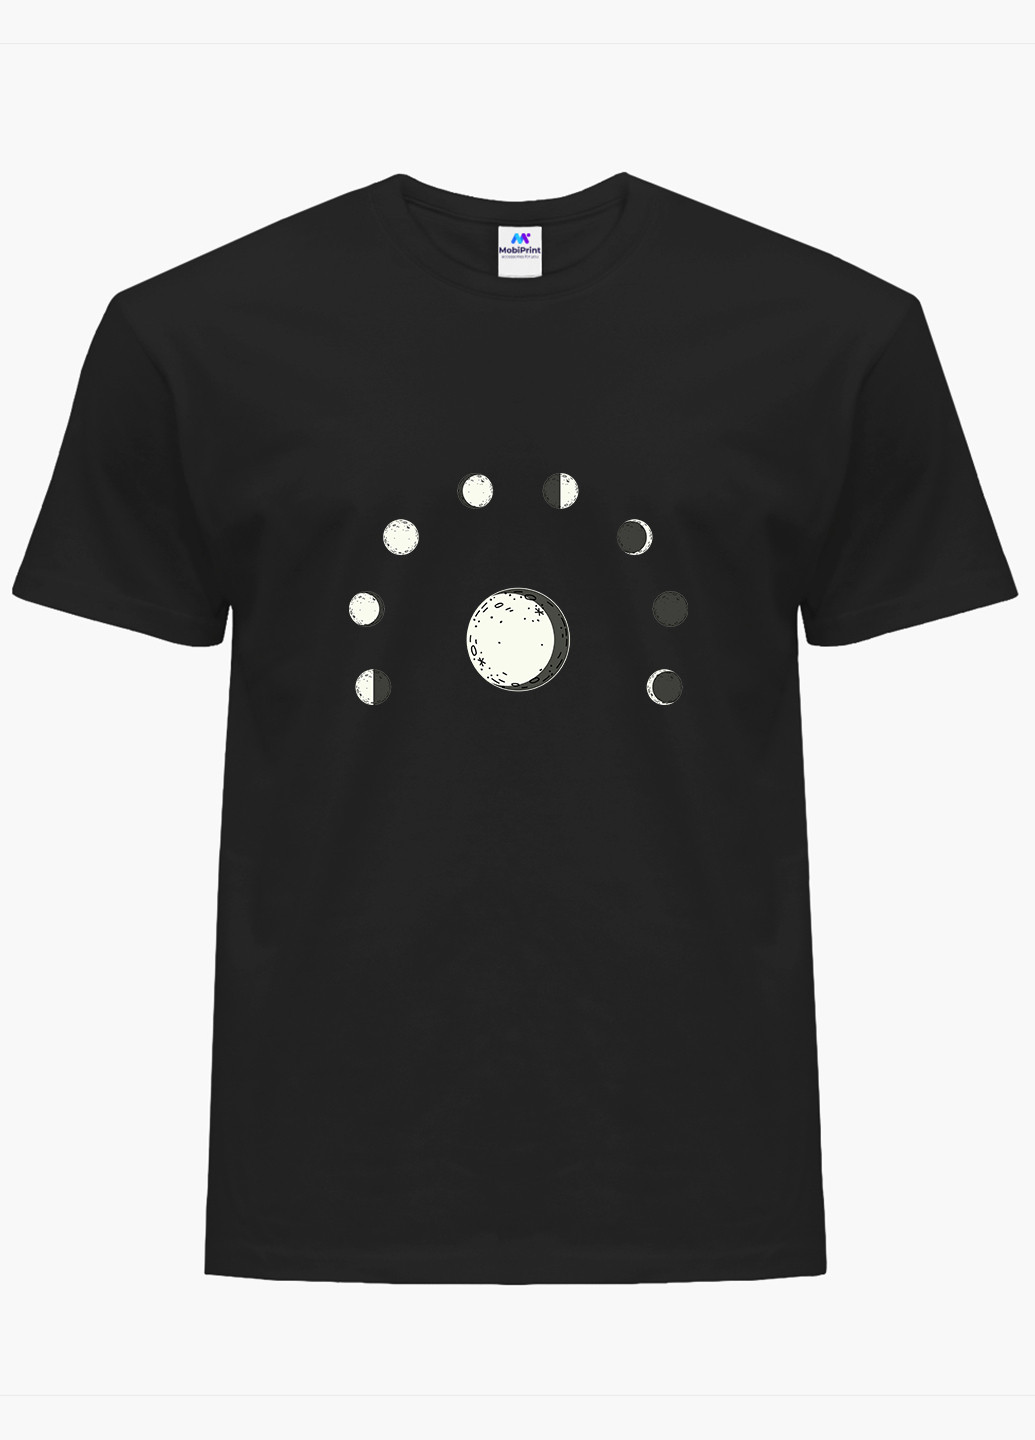 Черная демисезон футболка женская фазы луны (moon phases) (8976-1798) xxl MobiPrint